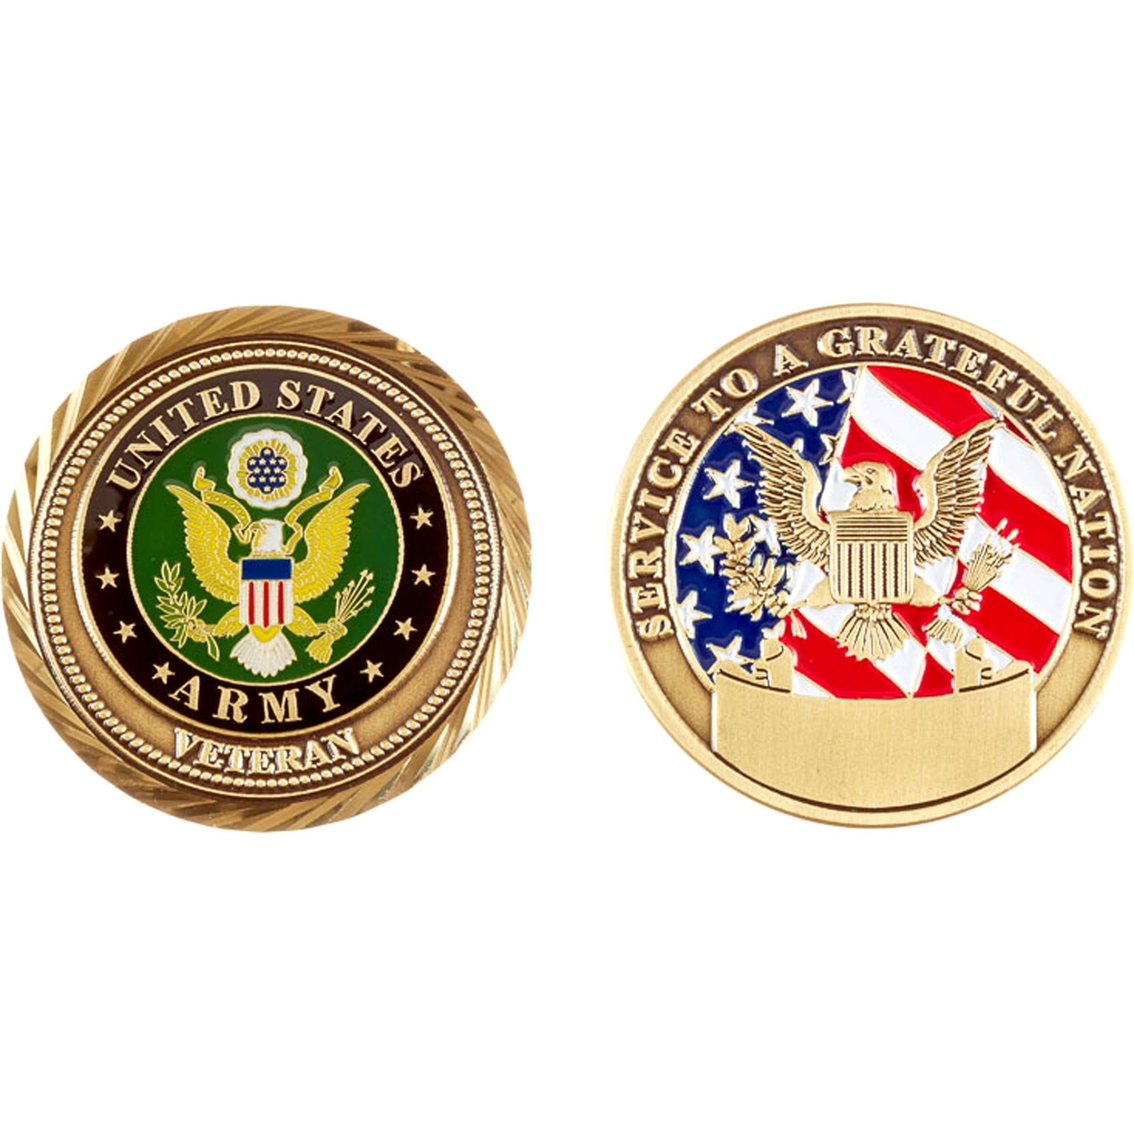 NEW U.S Army Veteran Challenge Coin.